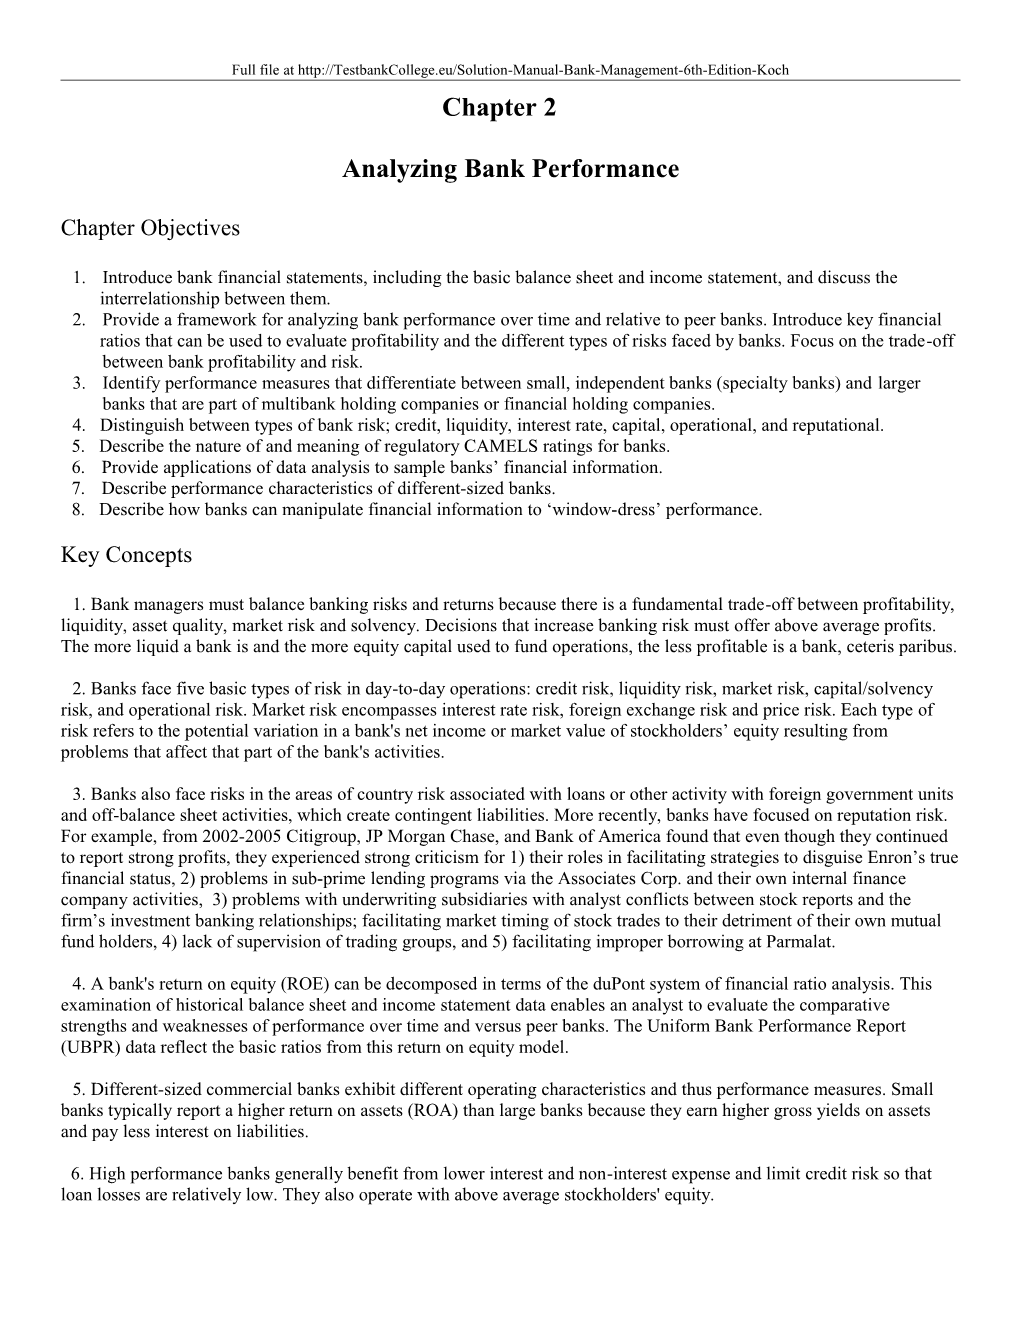 Analyzing Bank Performance